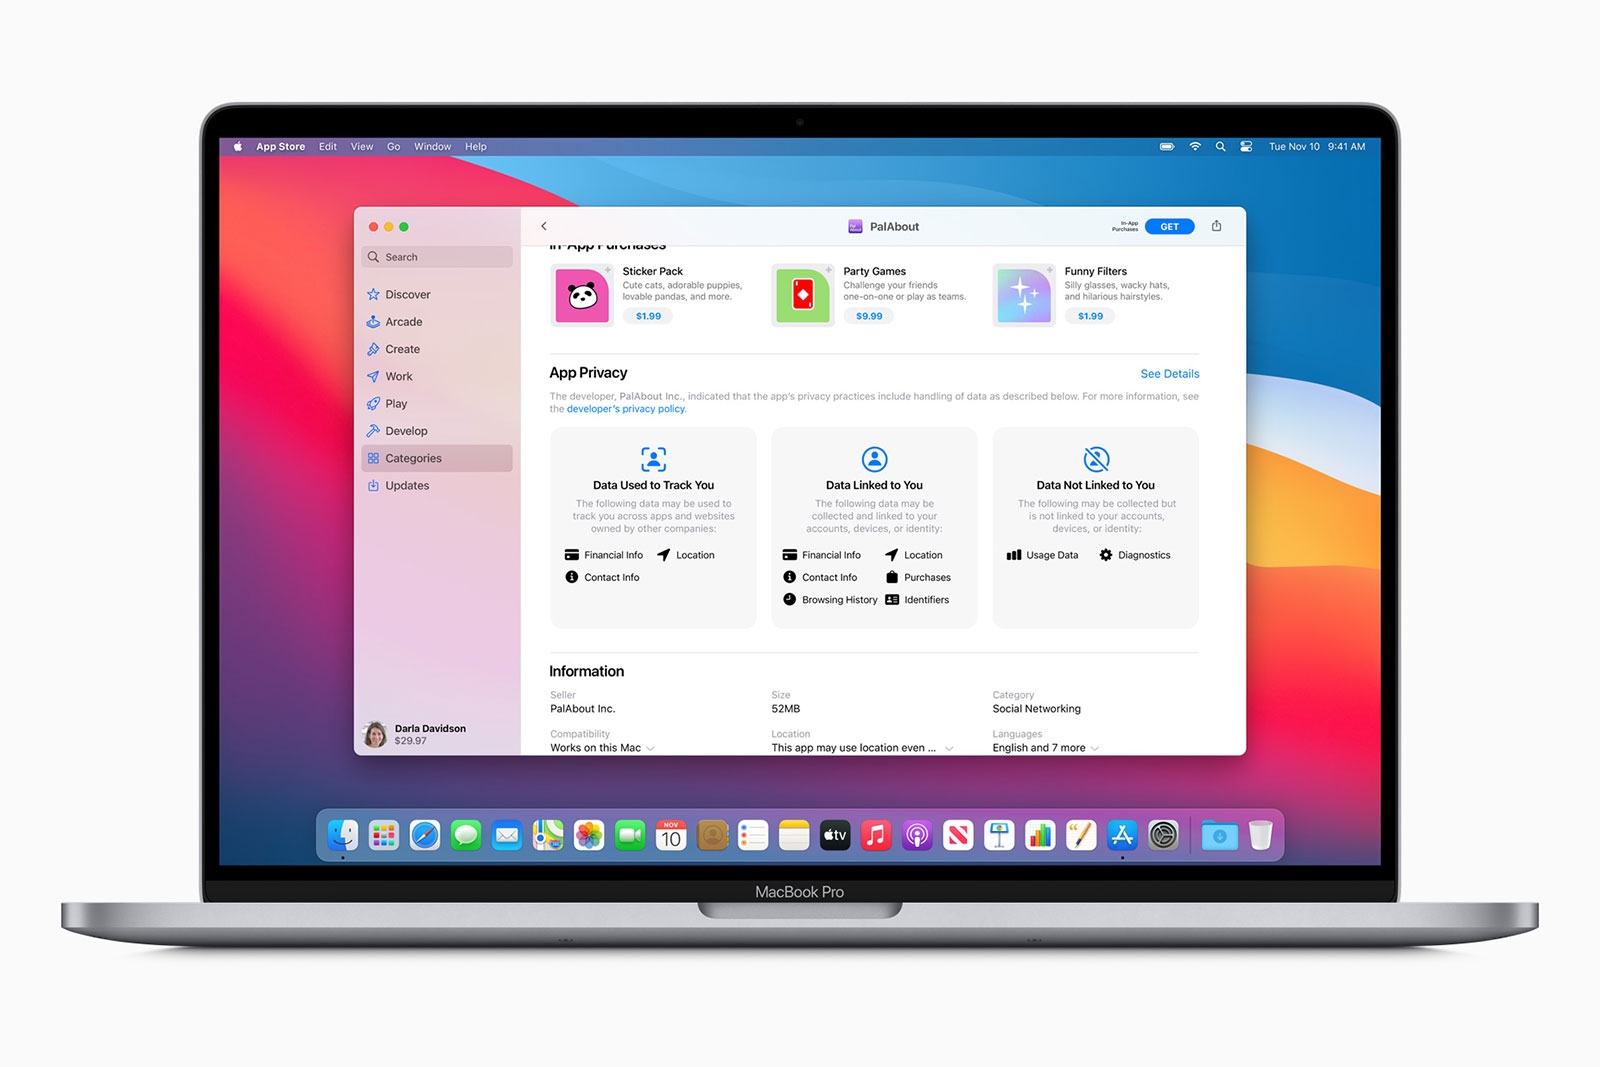 MacOS Big Sur update is bricking some older MacBook Pros | DeviceDaily.com